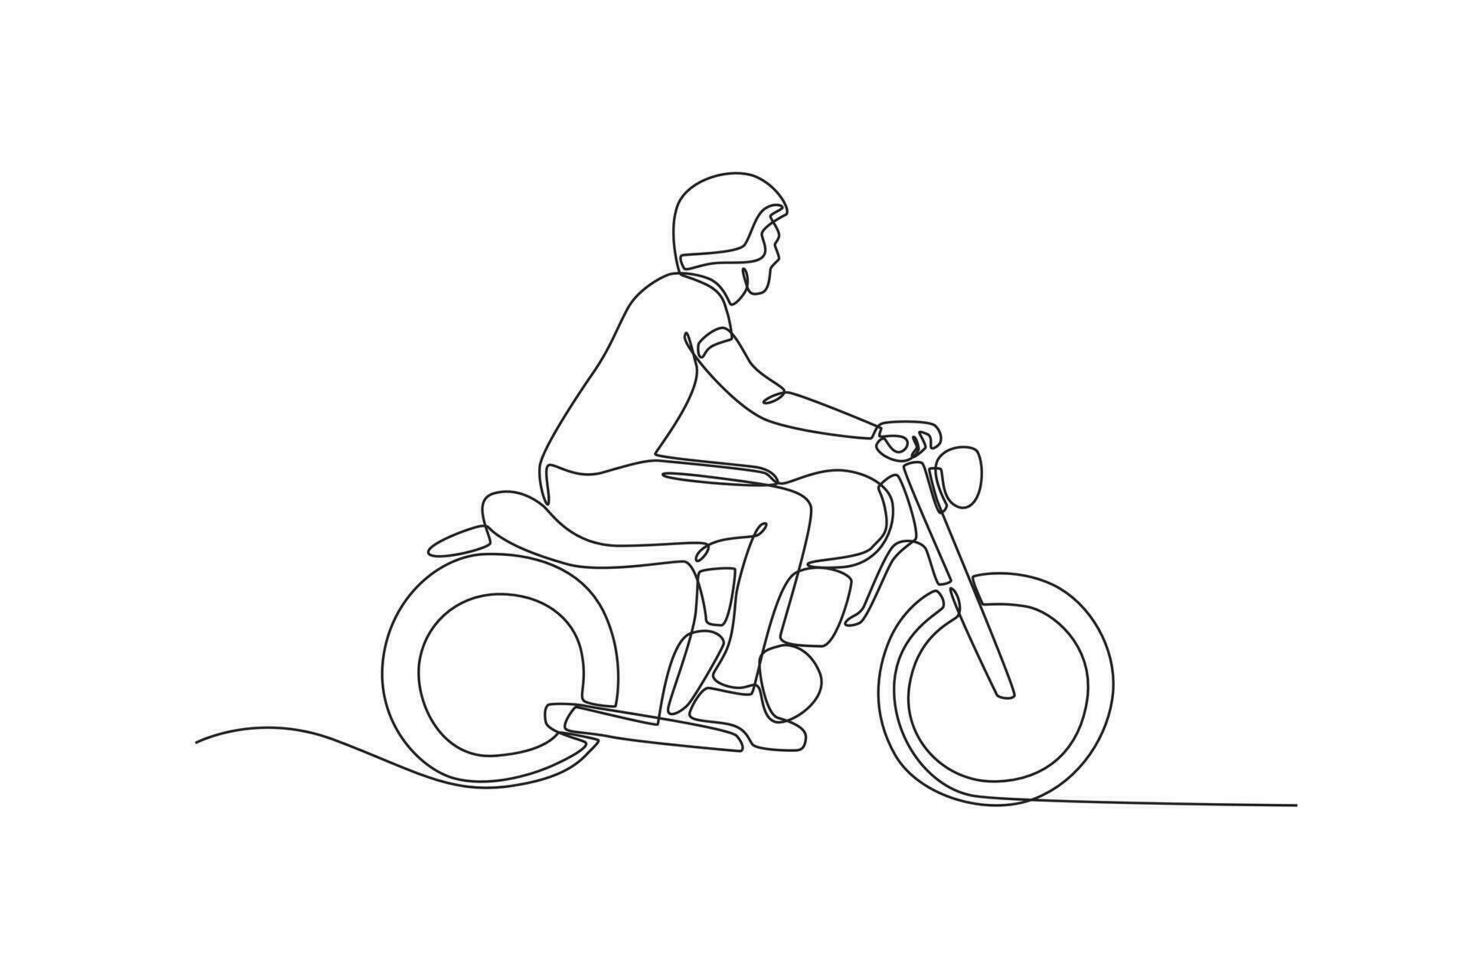 A biker riding a motorcycle vector